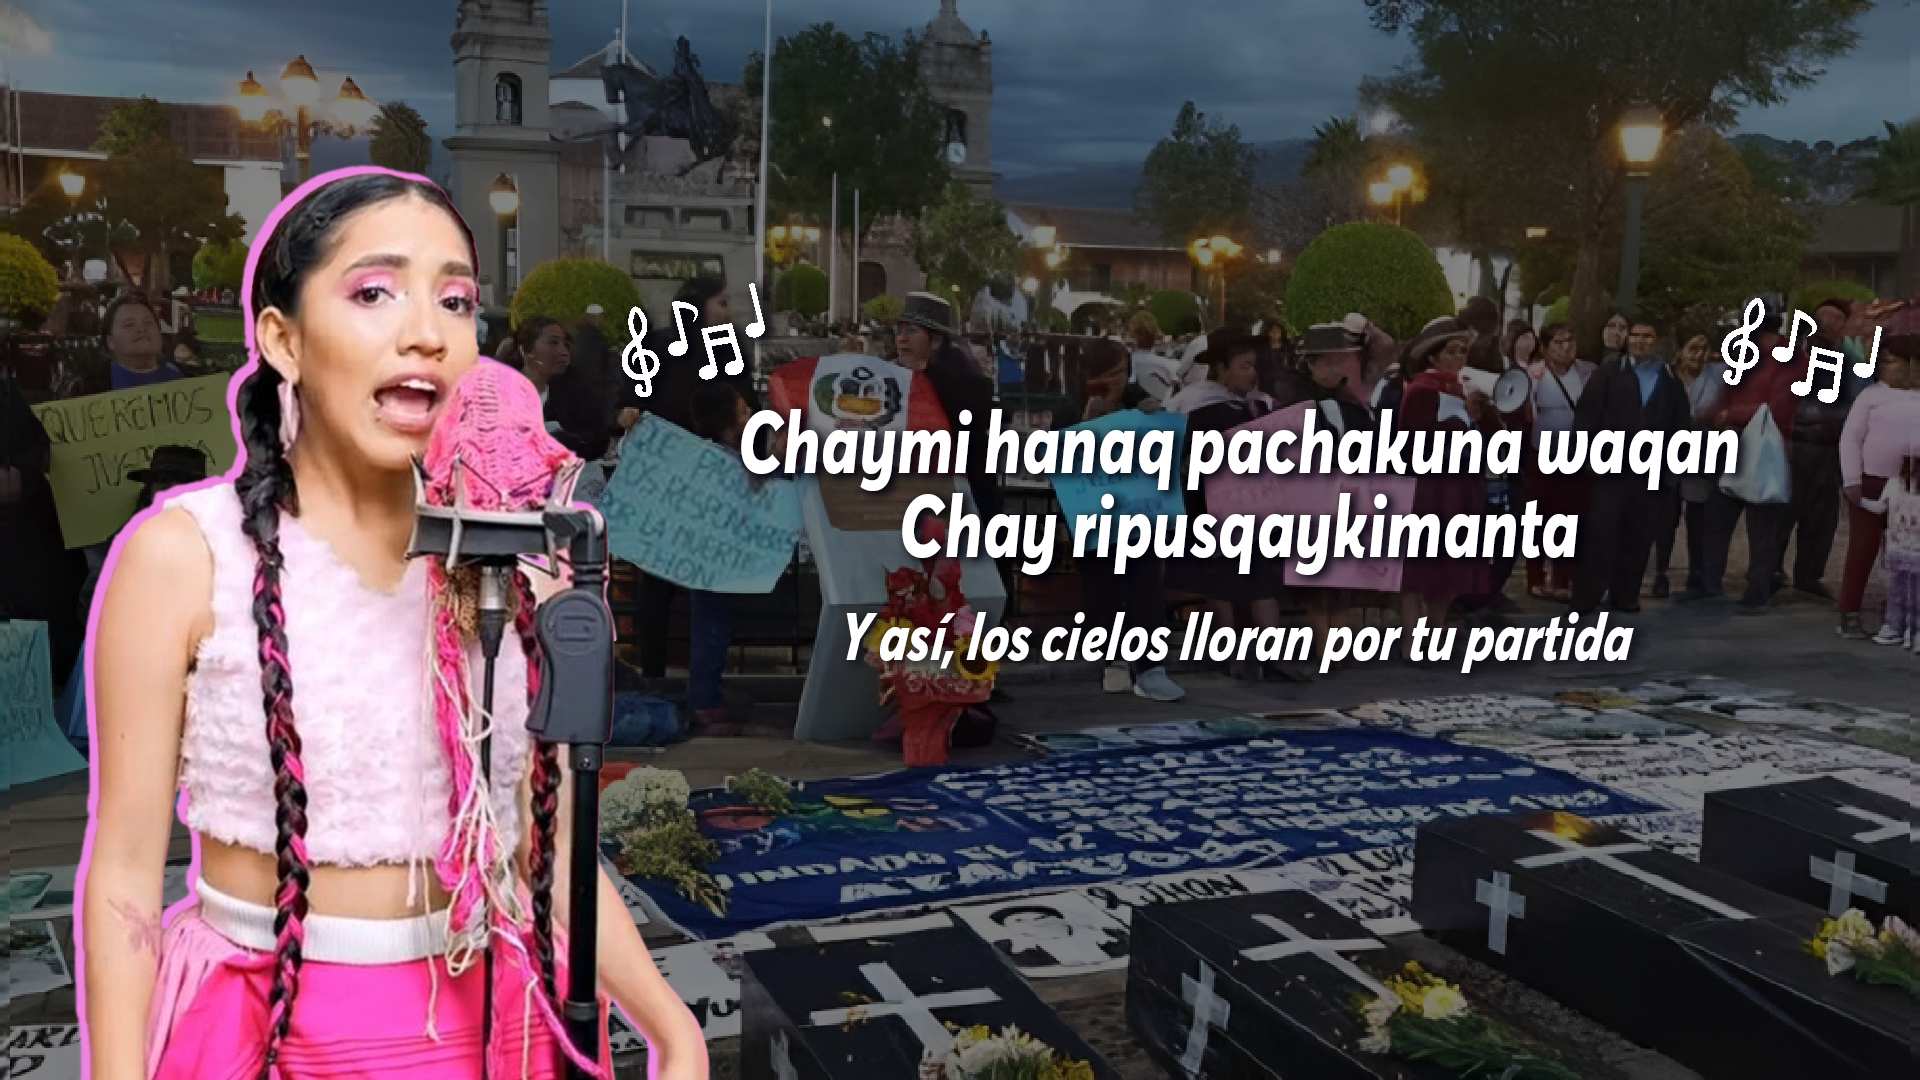 [Podcast] Renata Flores, la rapera que canta y protesta en quechua